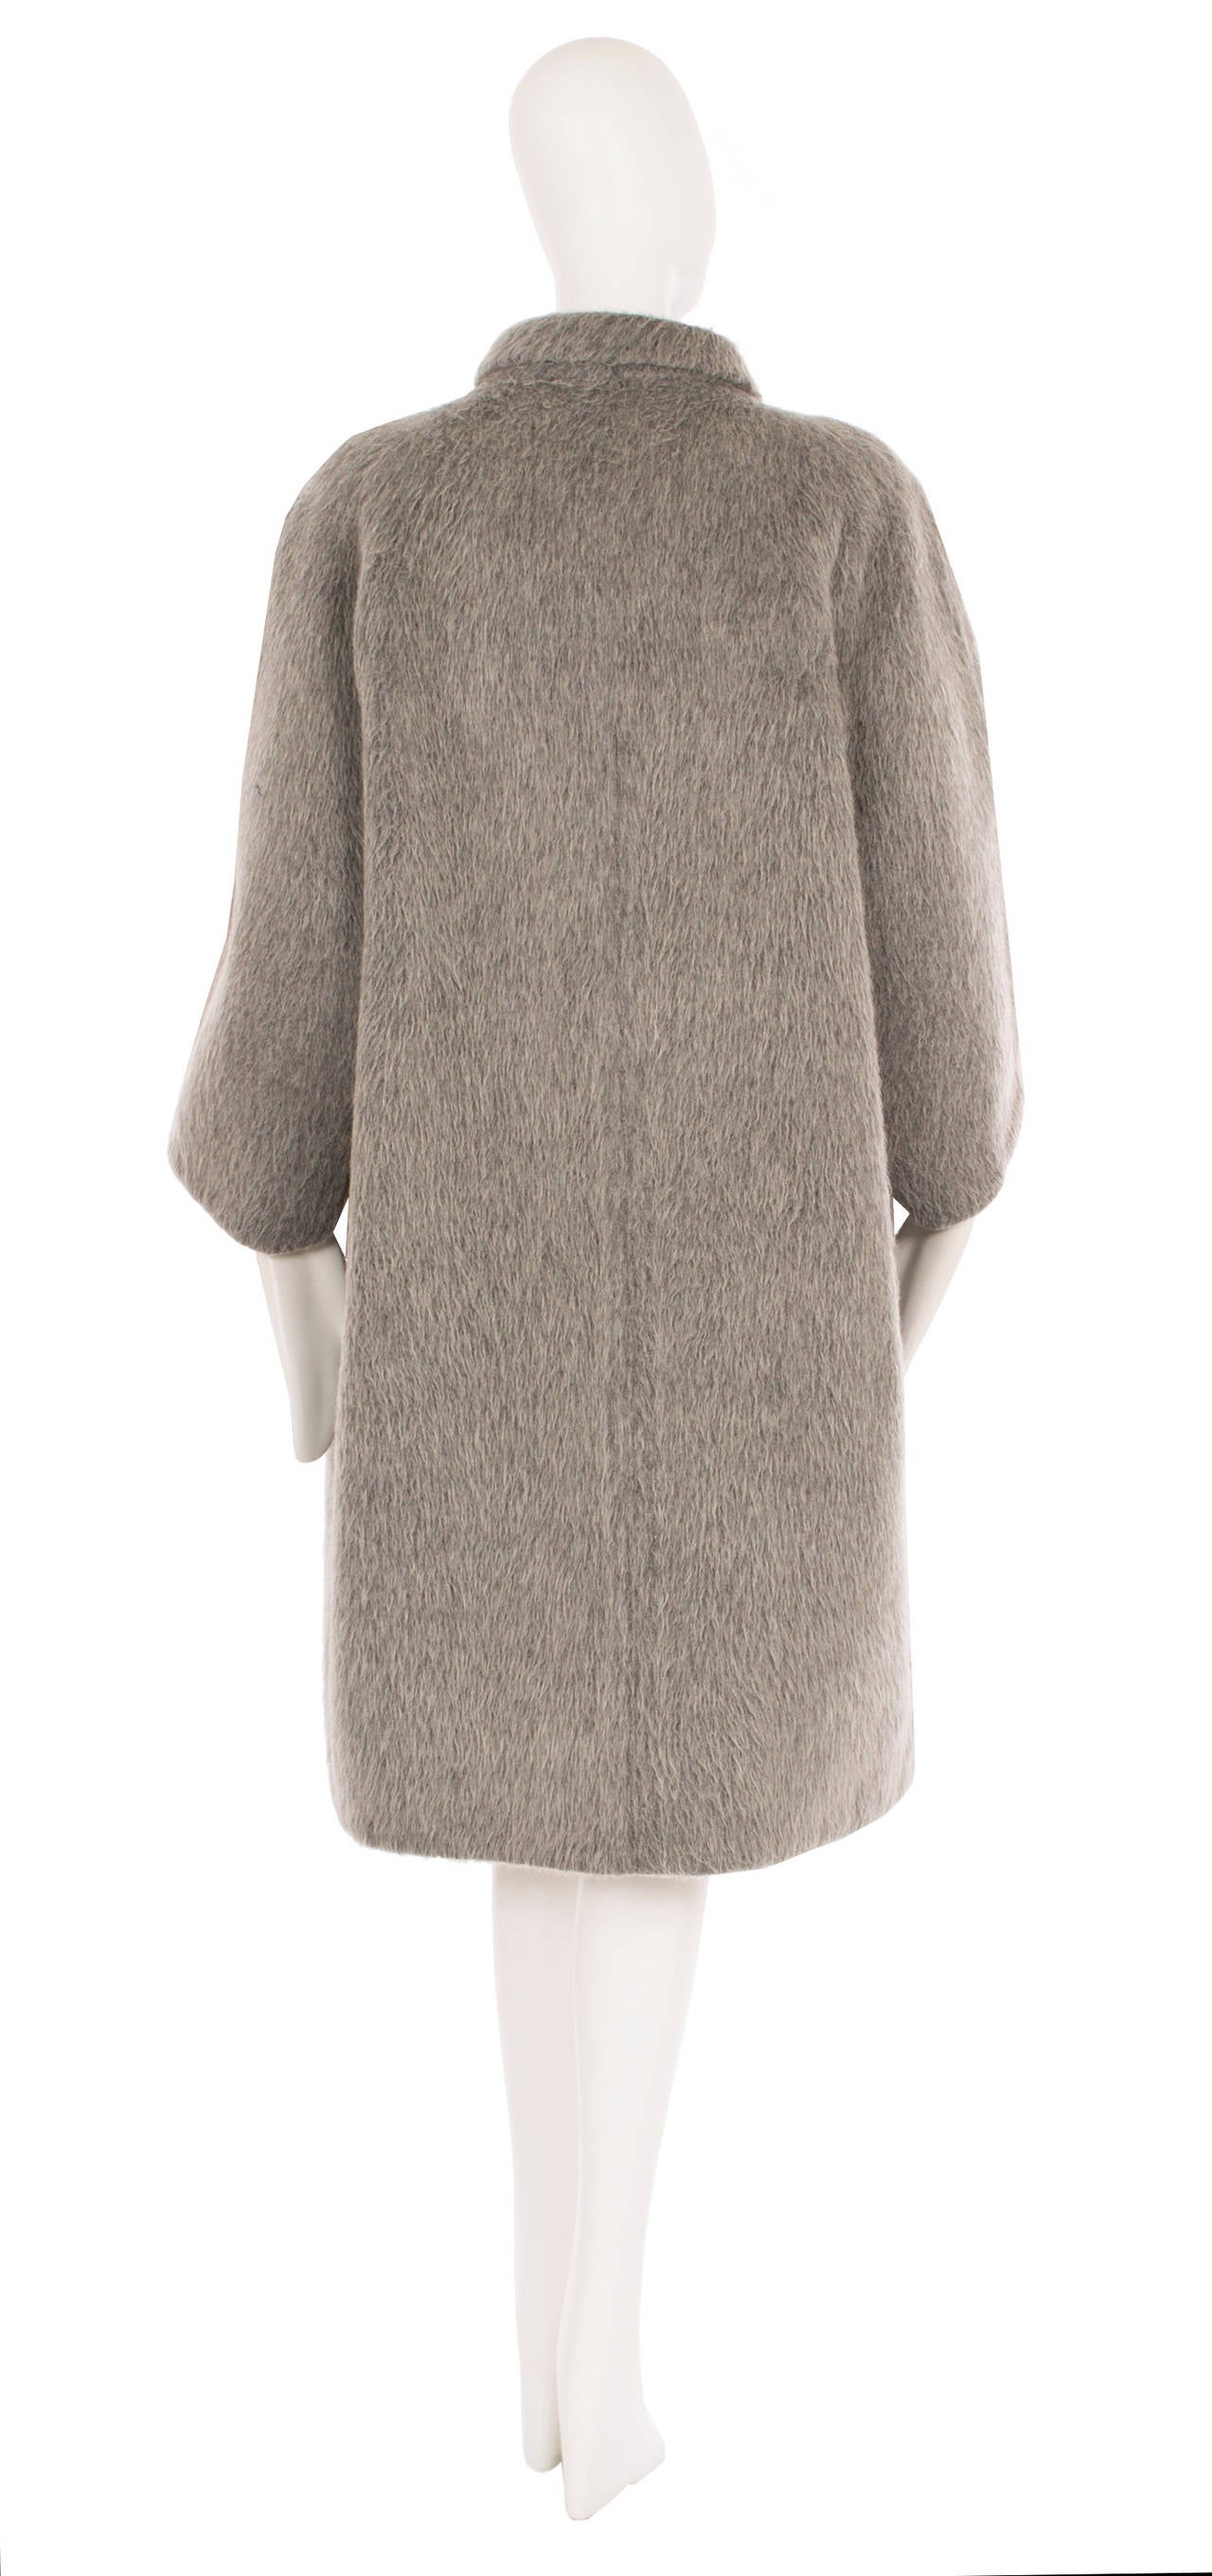 Balenciaga haute couture grey wool coat, Circa 1956 For Sale at 1stdibs